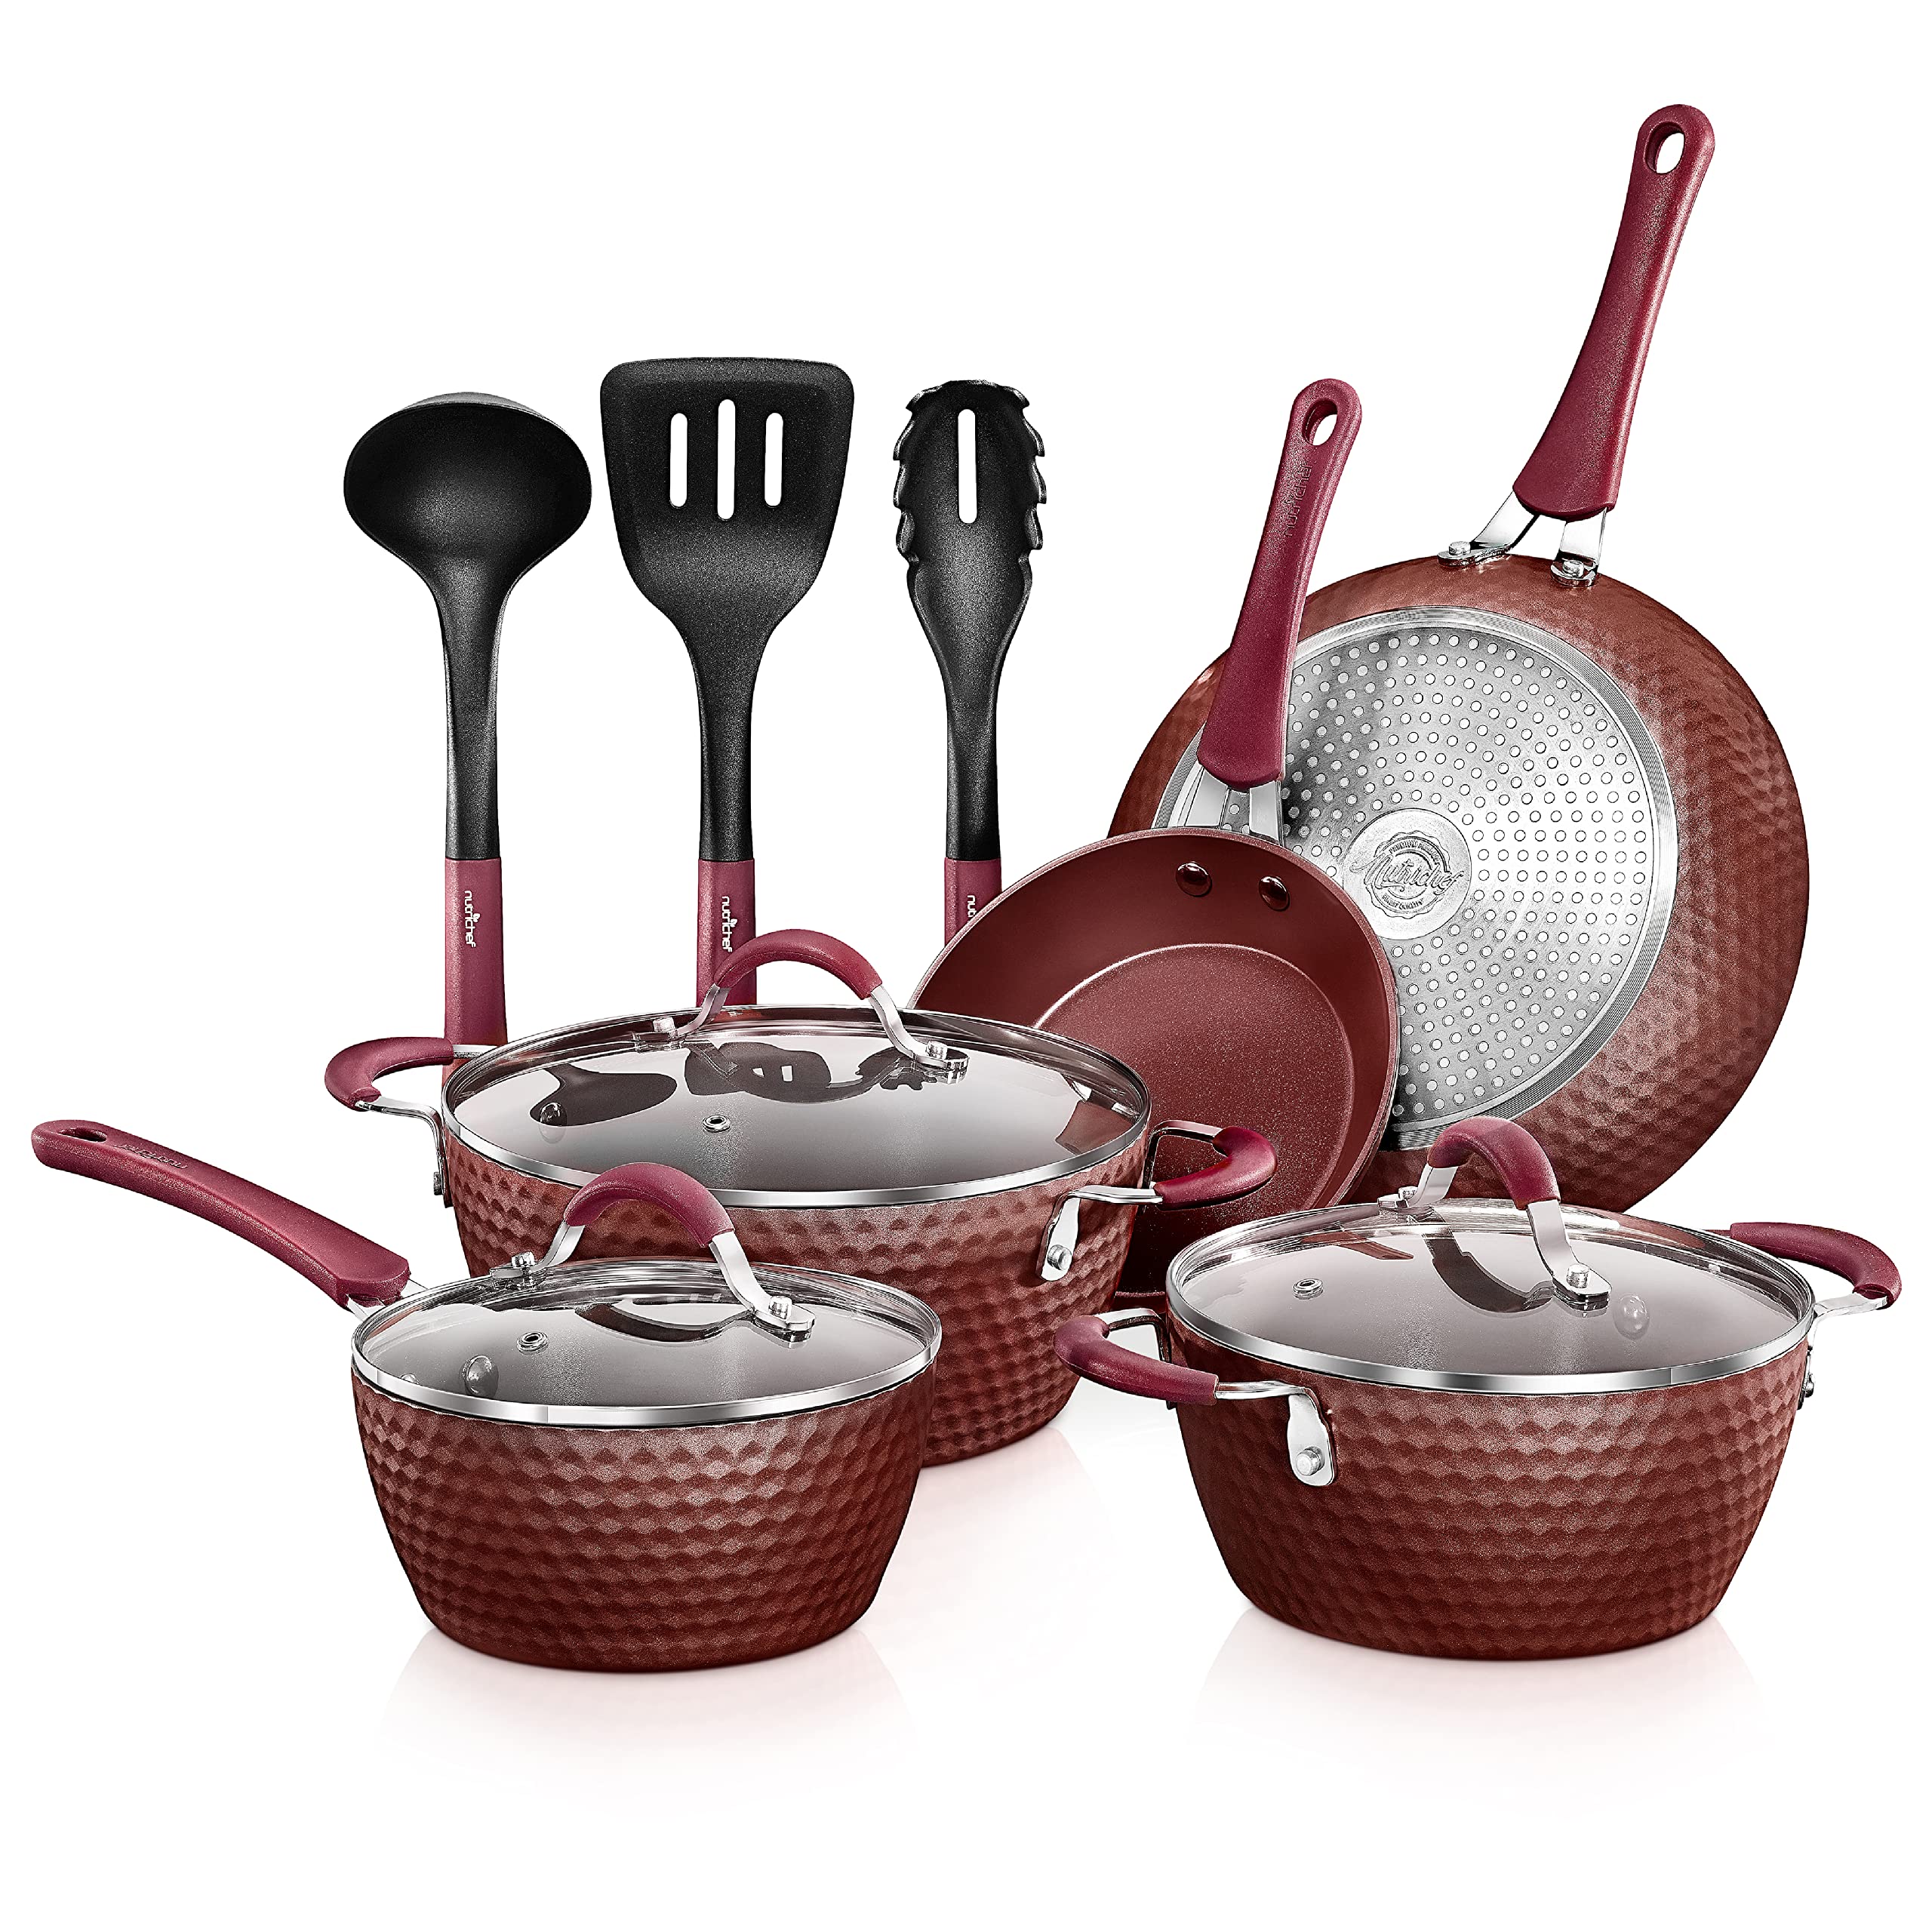 NutriChef Nonstick Cookware Excilon Home Kitchen Ware Pots & Pan Set with Saucepan Frying Pans, Cooking Pots, Lids, Utensil PTFE/PFOA/PFOS free, 11 Pcs, Purple Diamond, One size